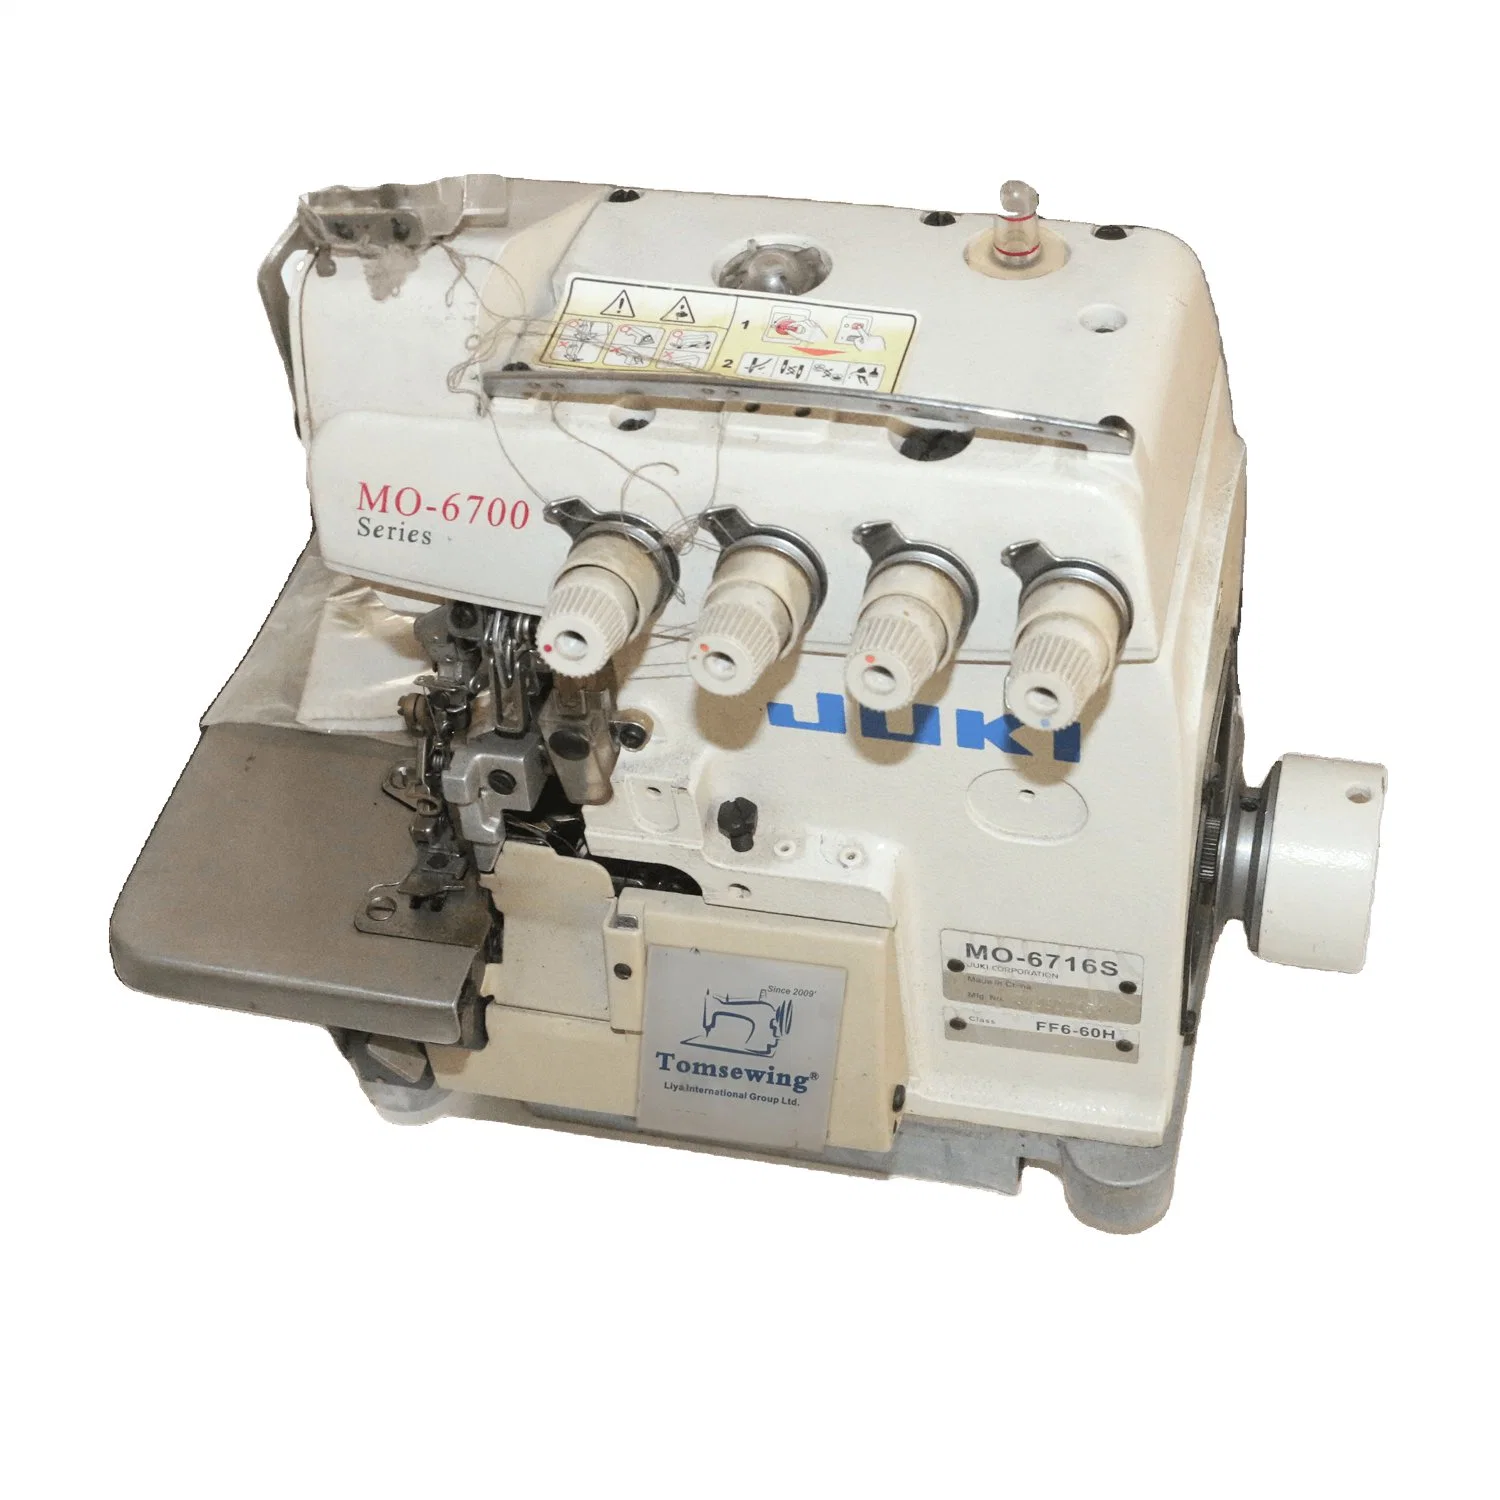 Used Overlock Sewing Machine Secondhand Juki Mo 6700 Maquinas De Coser Usedas